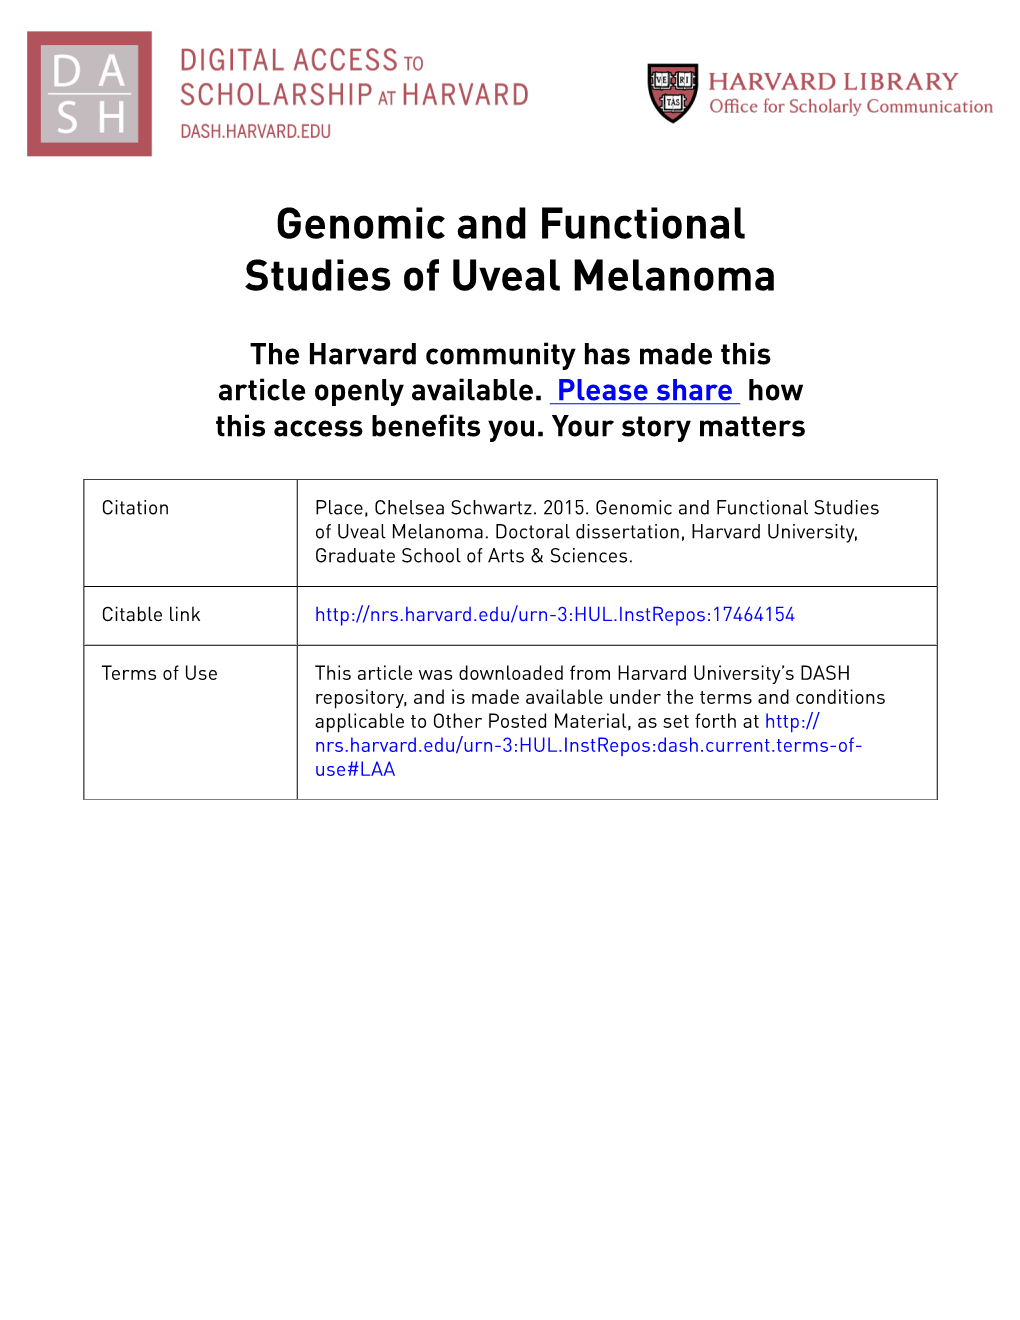 Genomic and Functional Studies of Uveal Melanoma